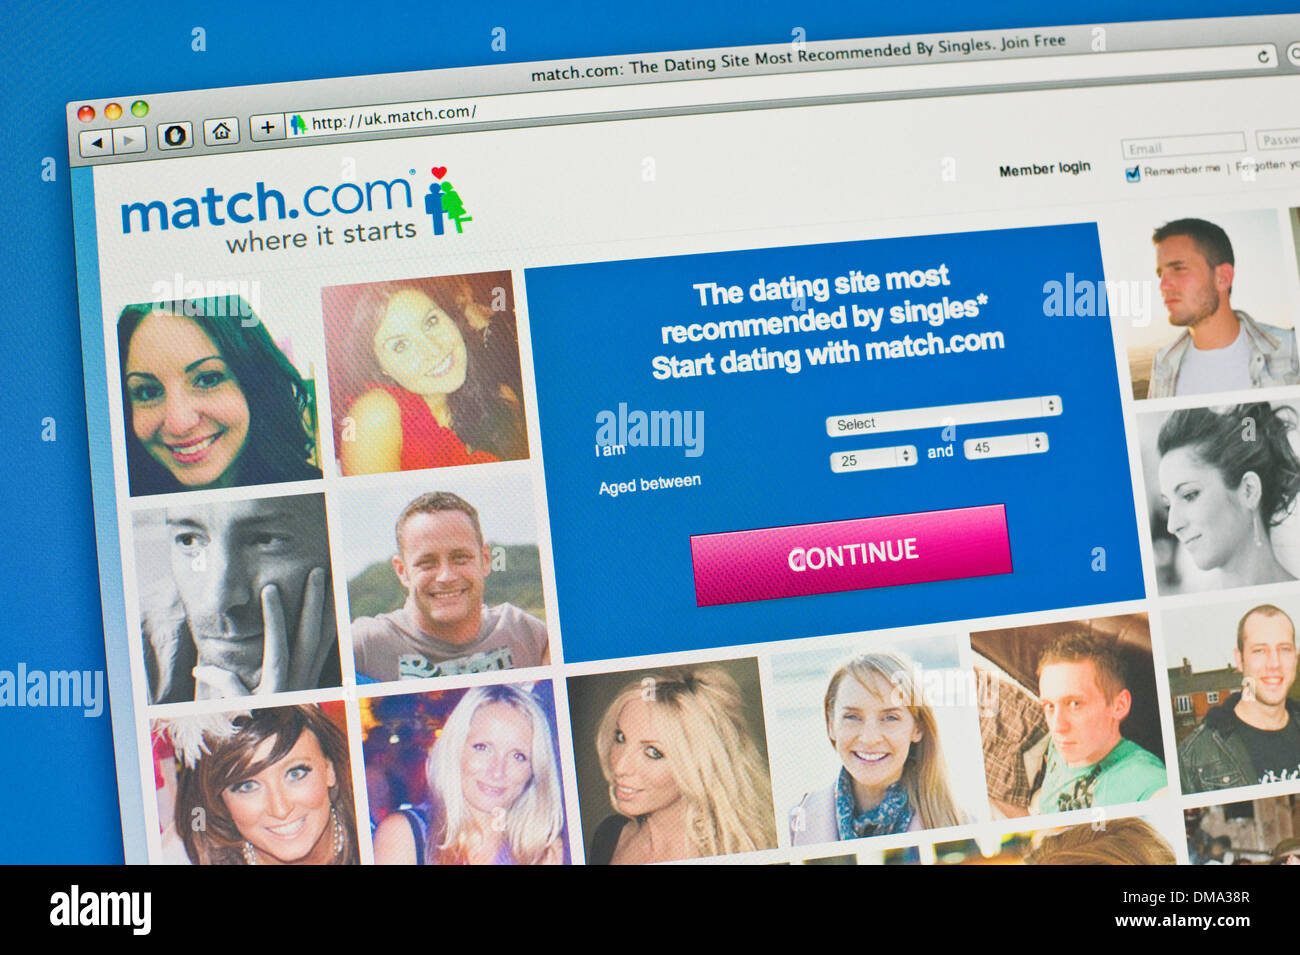 Match online dating website Stock Photo